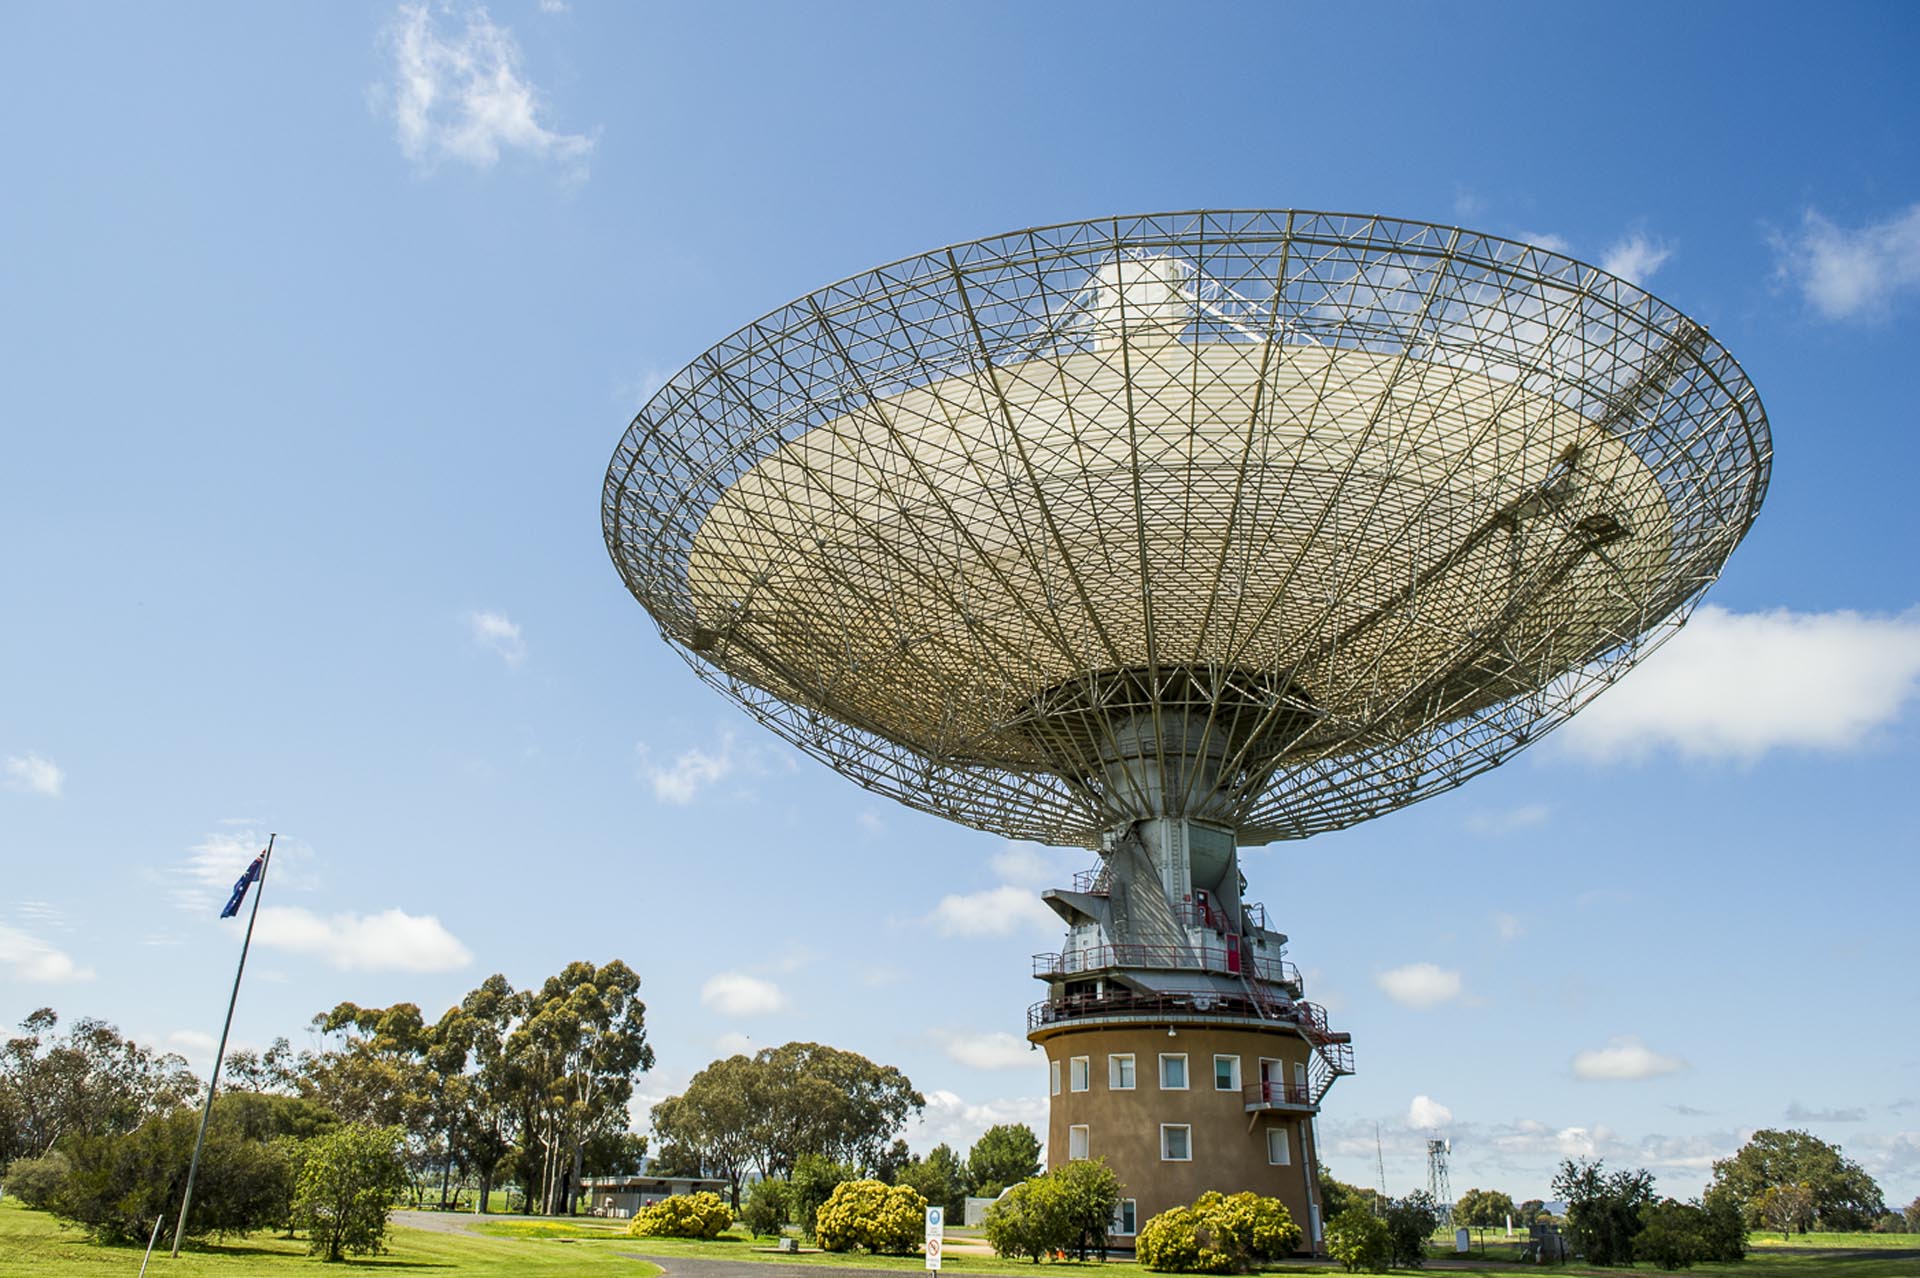 A satellite dish South Wales, Australlia